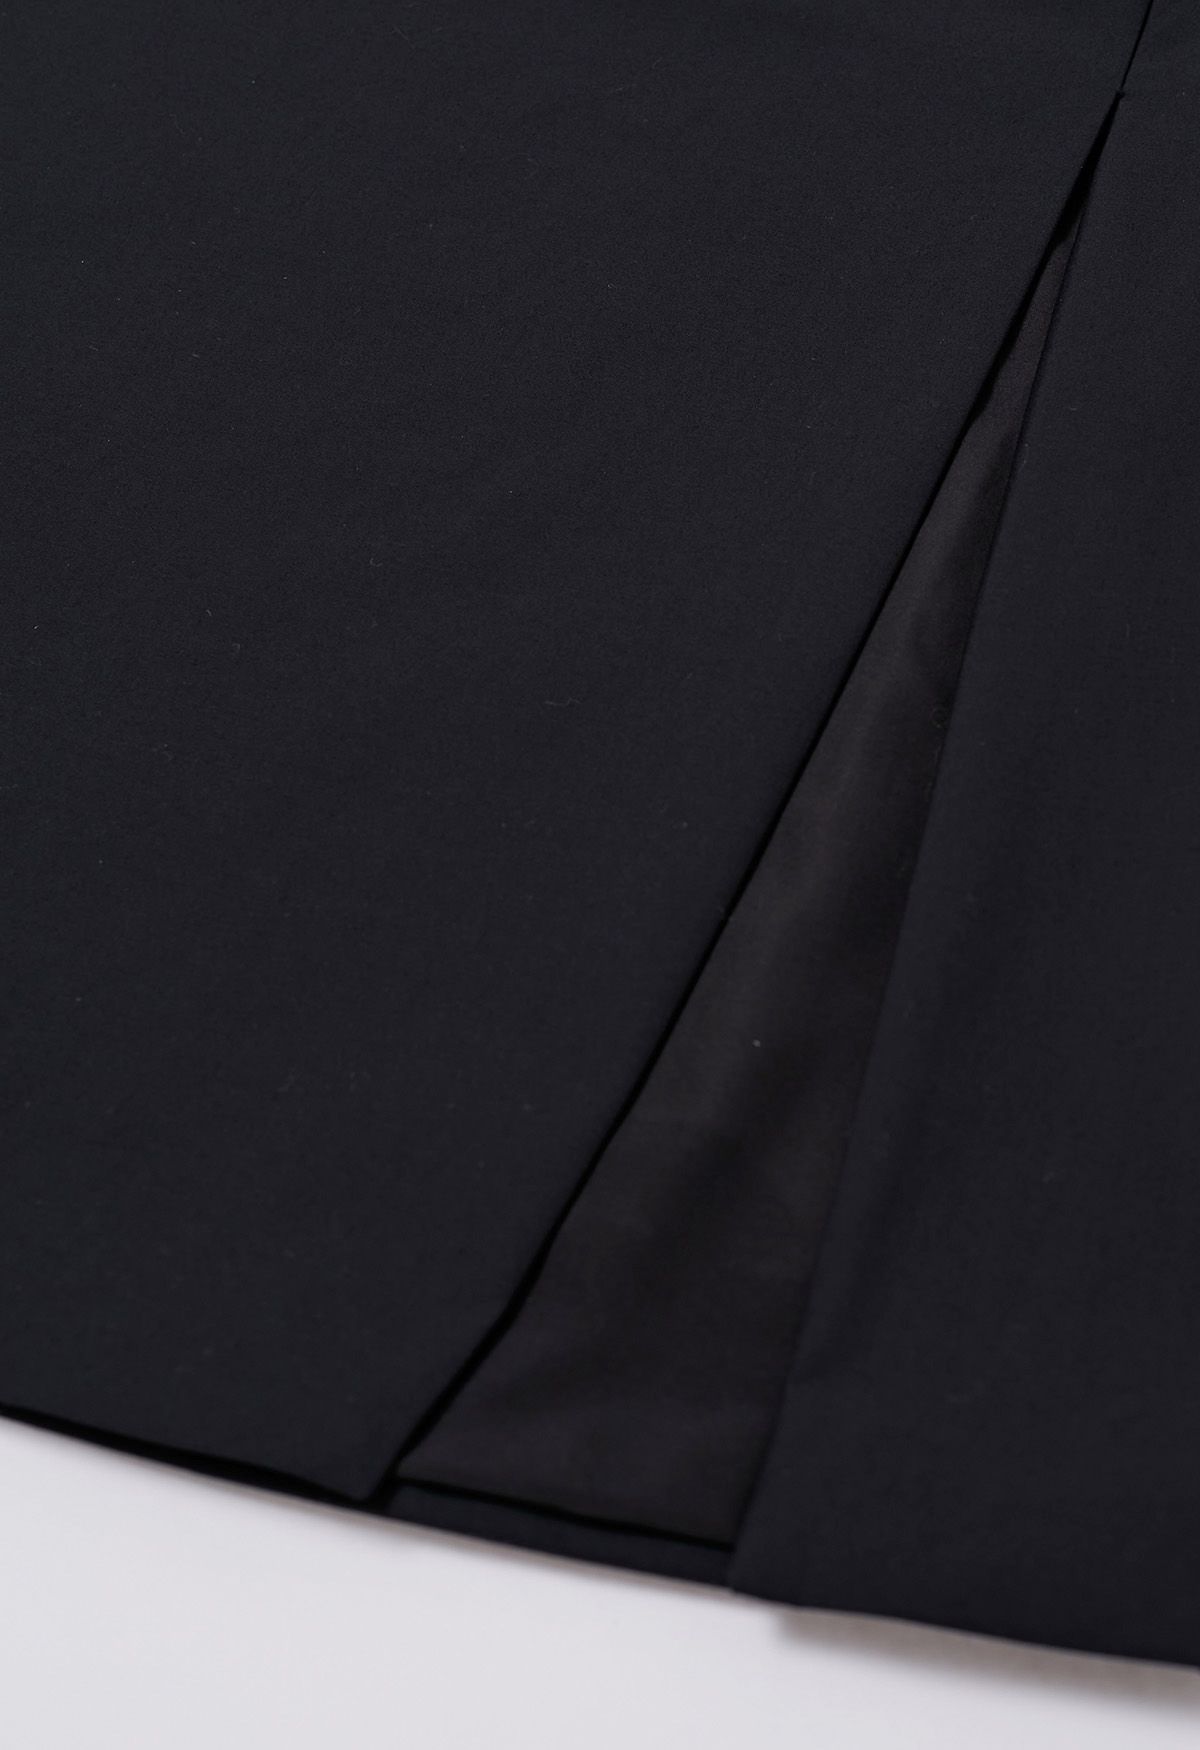 Self-Tie Sash Front Slit Skirt in Black